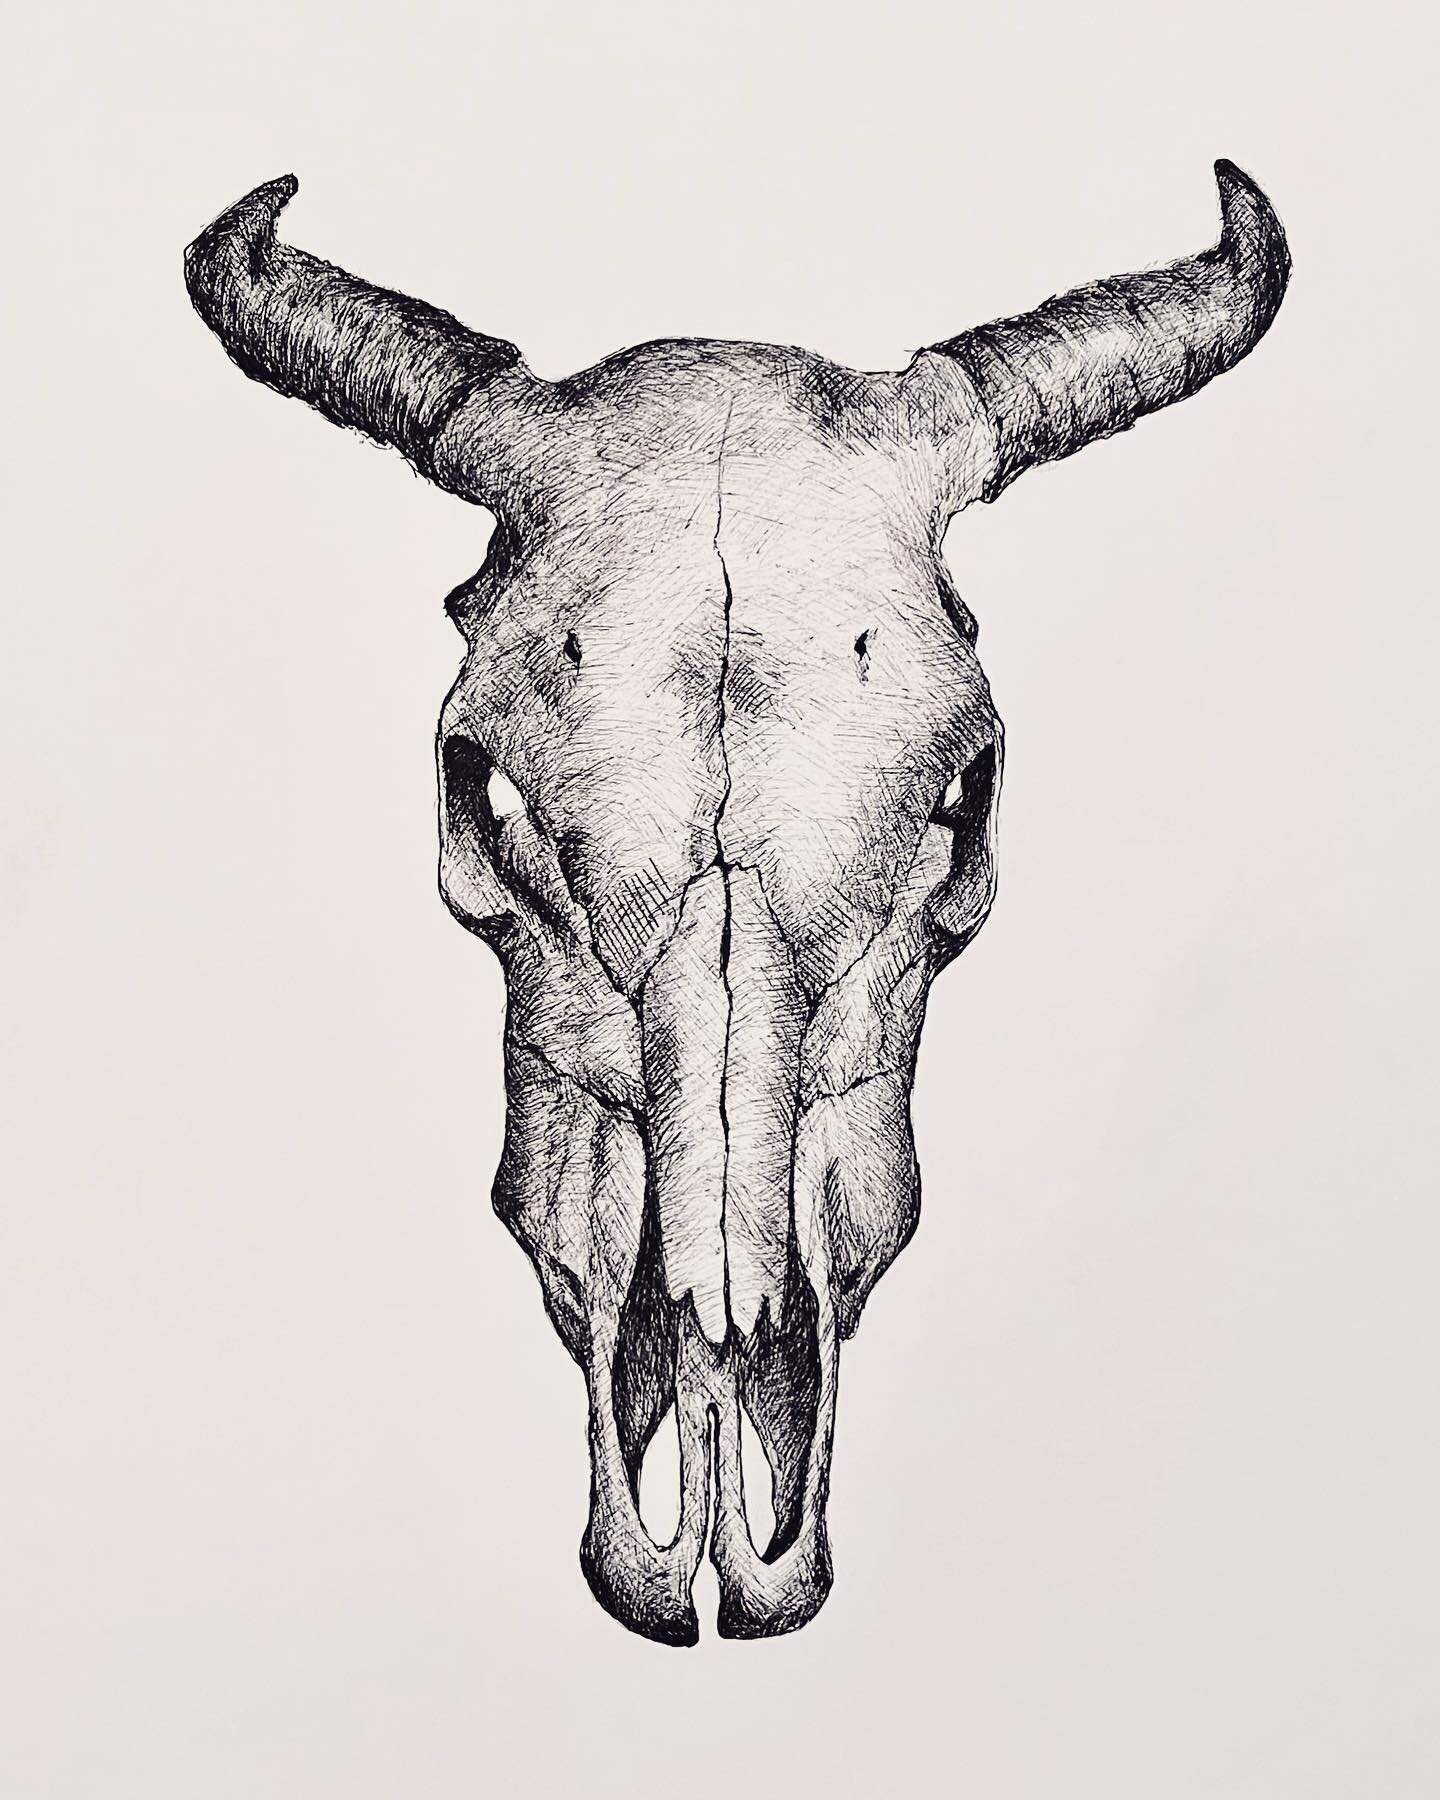 Continuing with the  #crosshatching adventure.

#skull #skulldrawing #animalskull  #pendrawing #inkdrawing #drawalongwithfrance #tasmanianart #tasmanianartist #drawingpractice #sketchbook #drawingart #crosshatchingtechnique #crosshatchingart #sikorsk